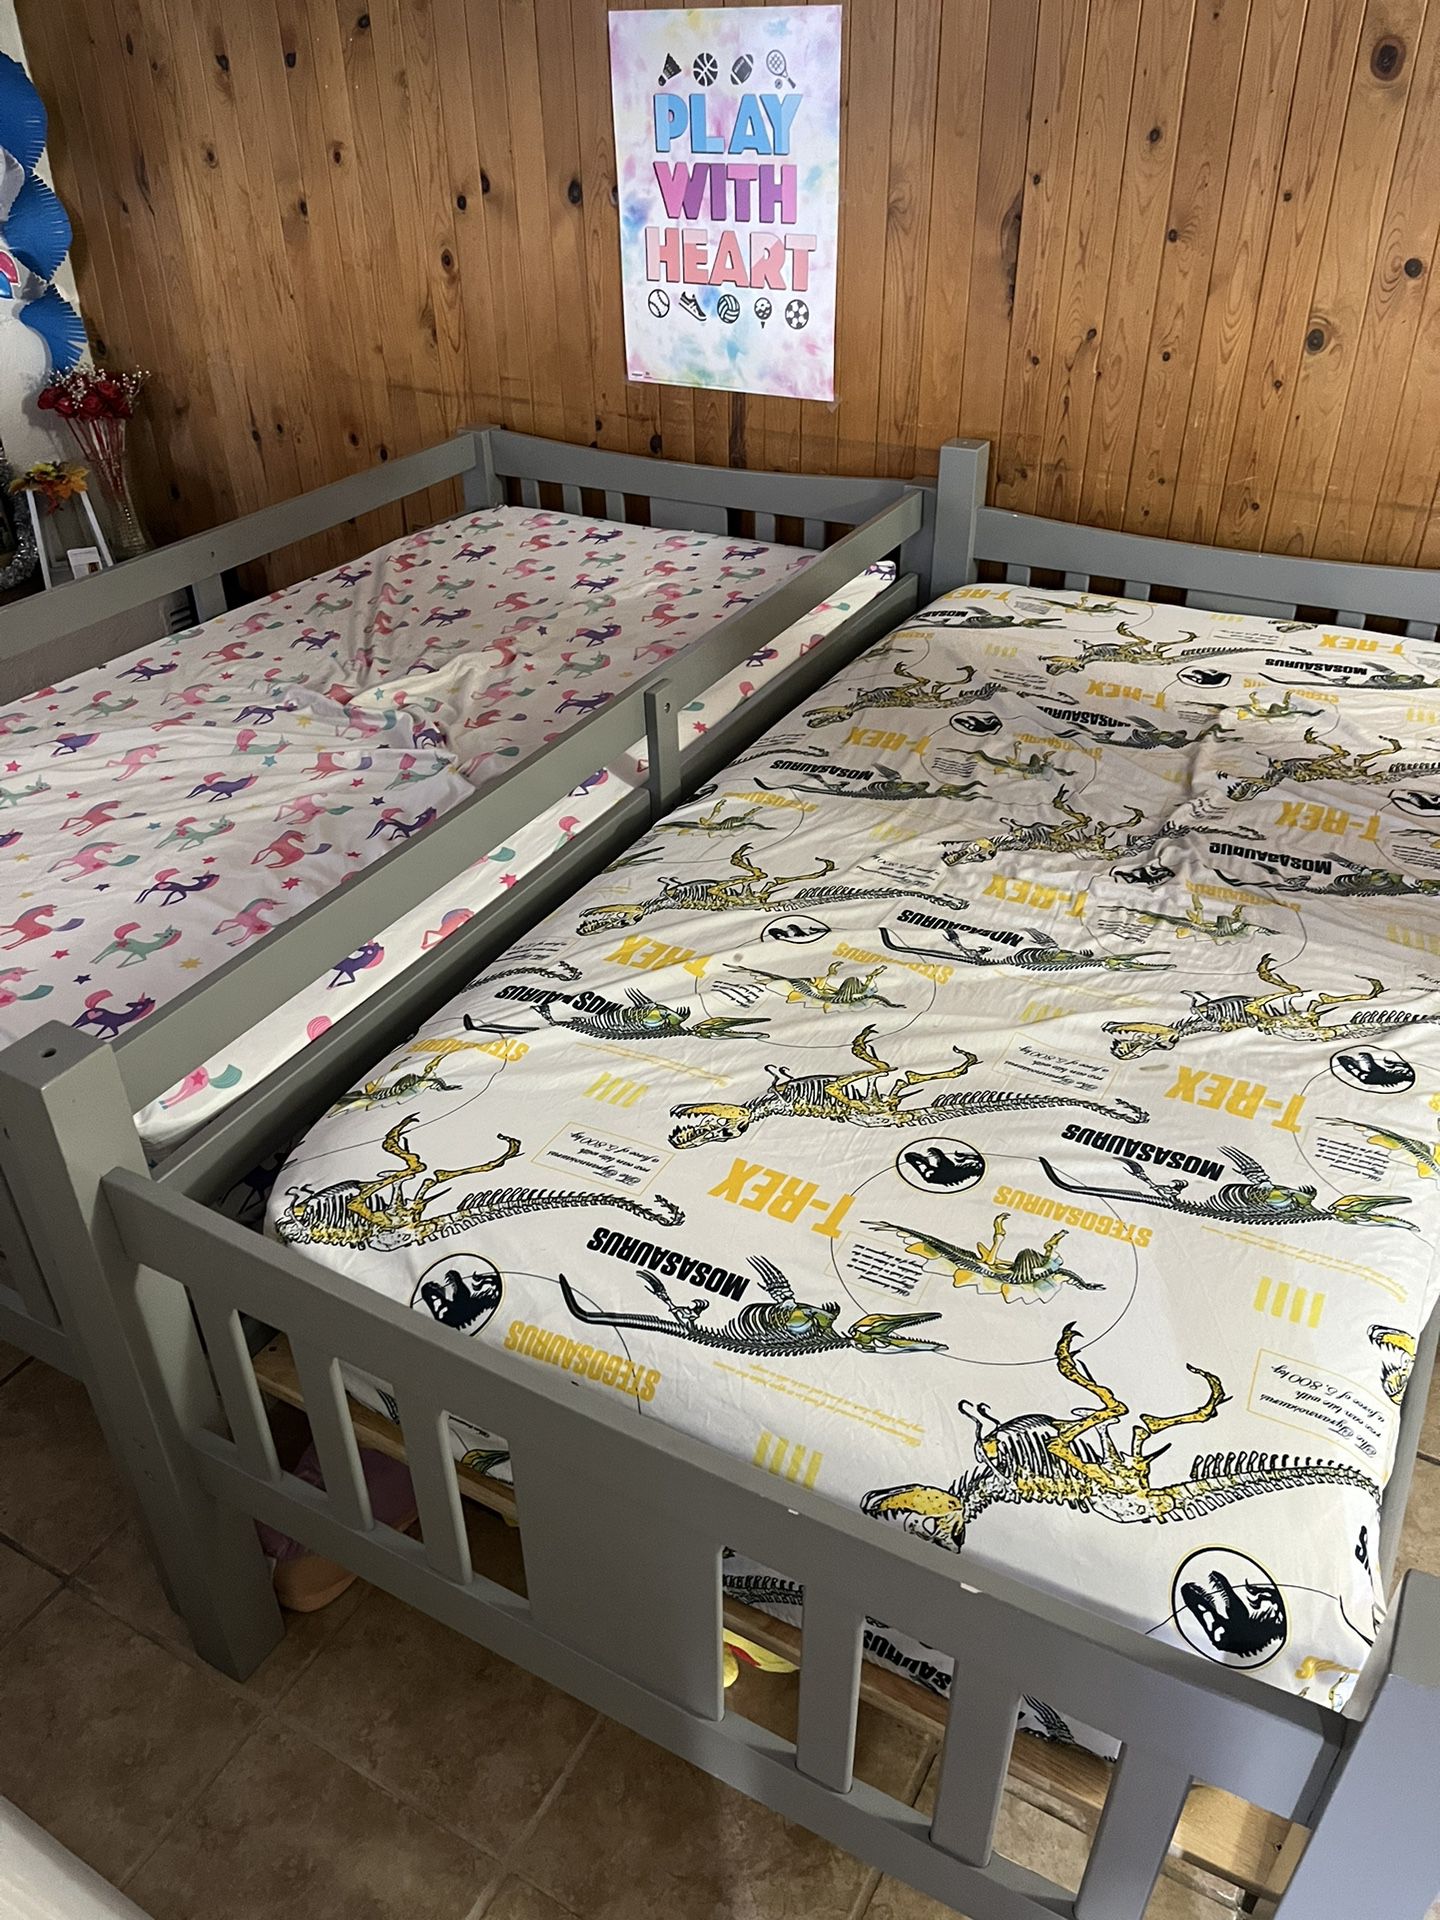 Bunk Beds Twin Mattresses 